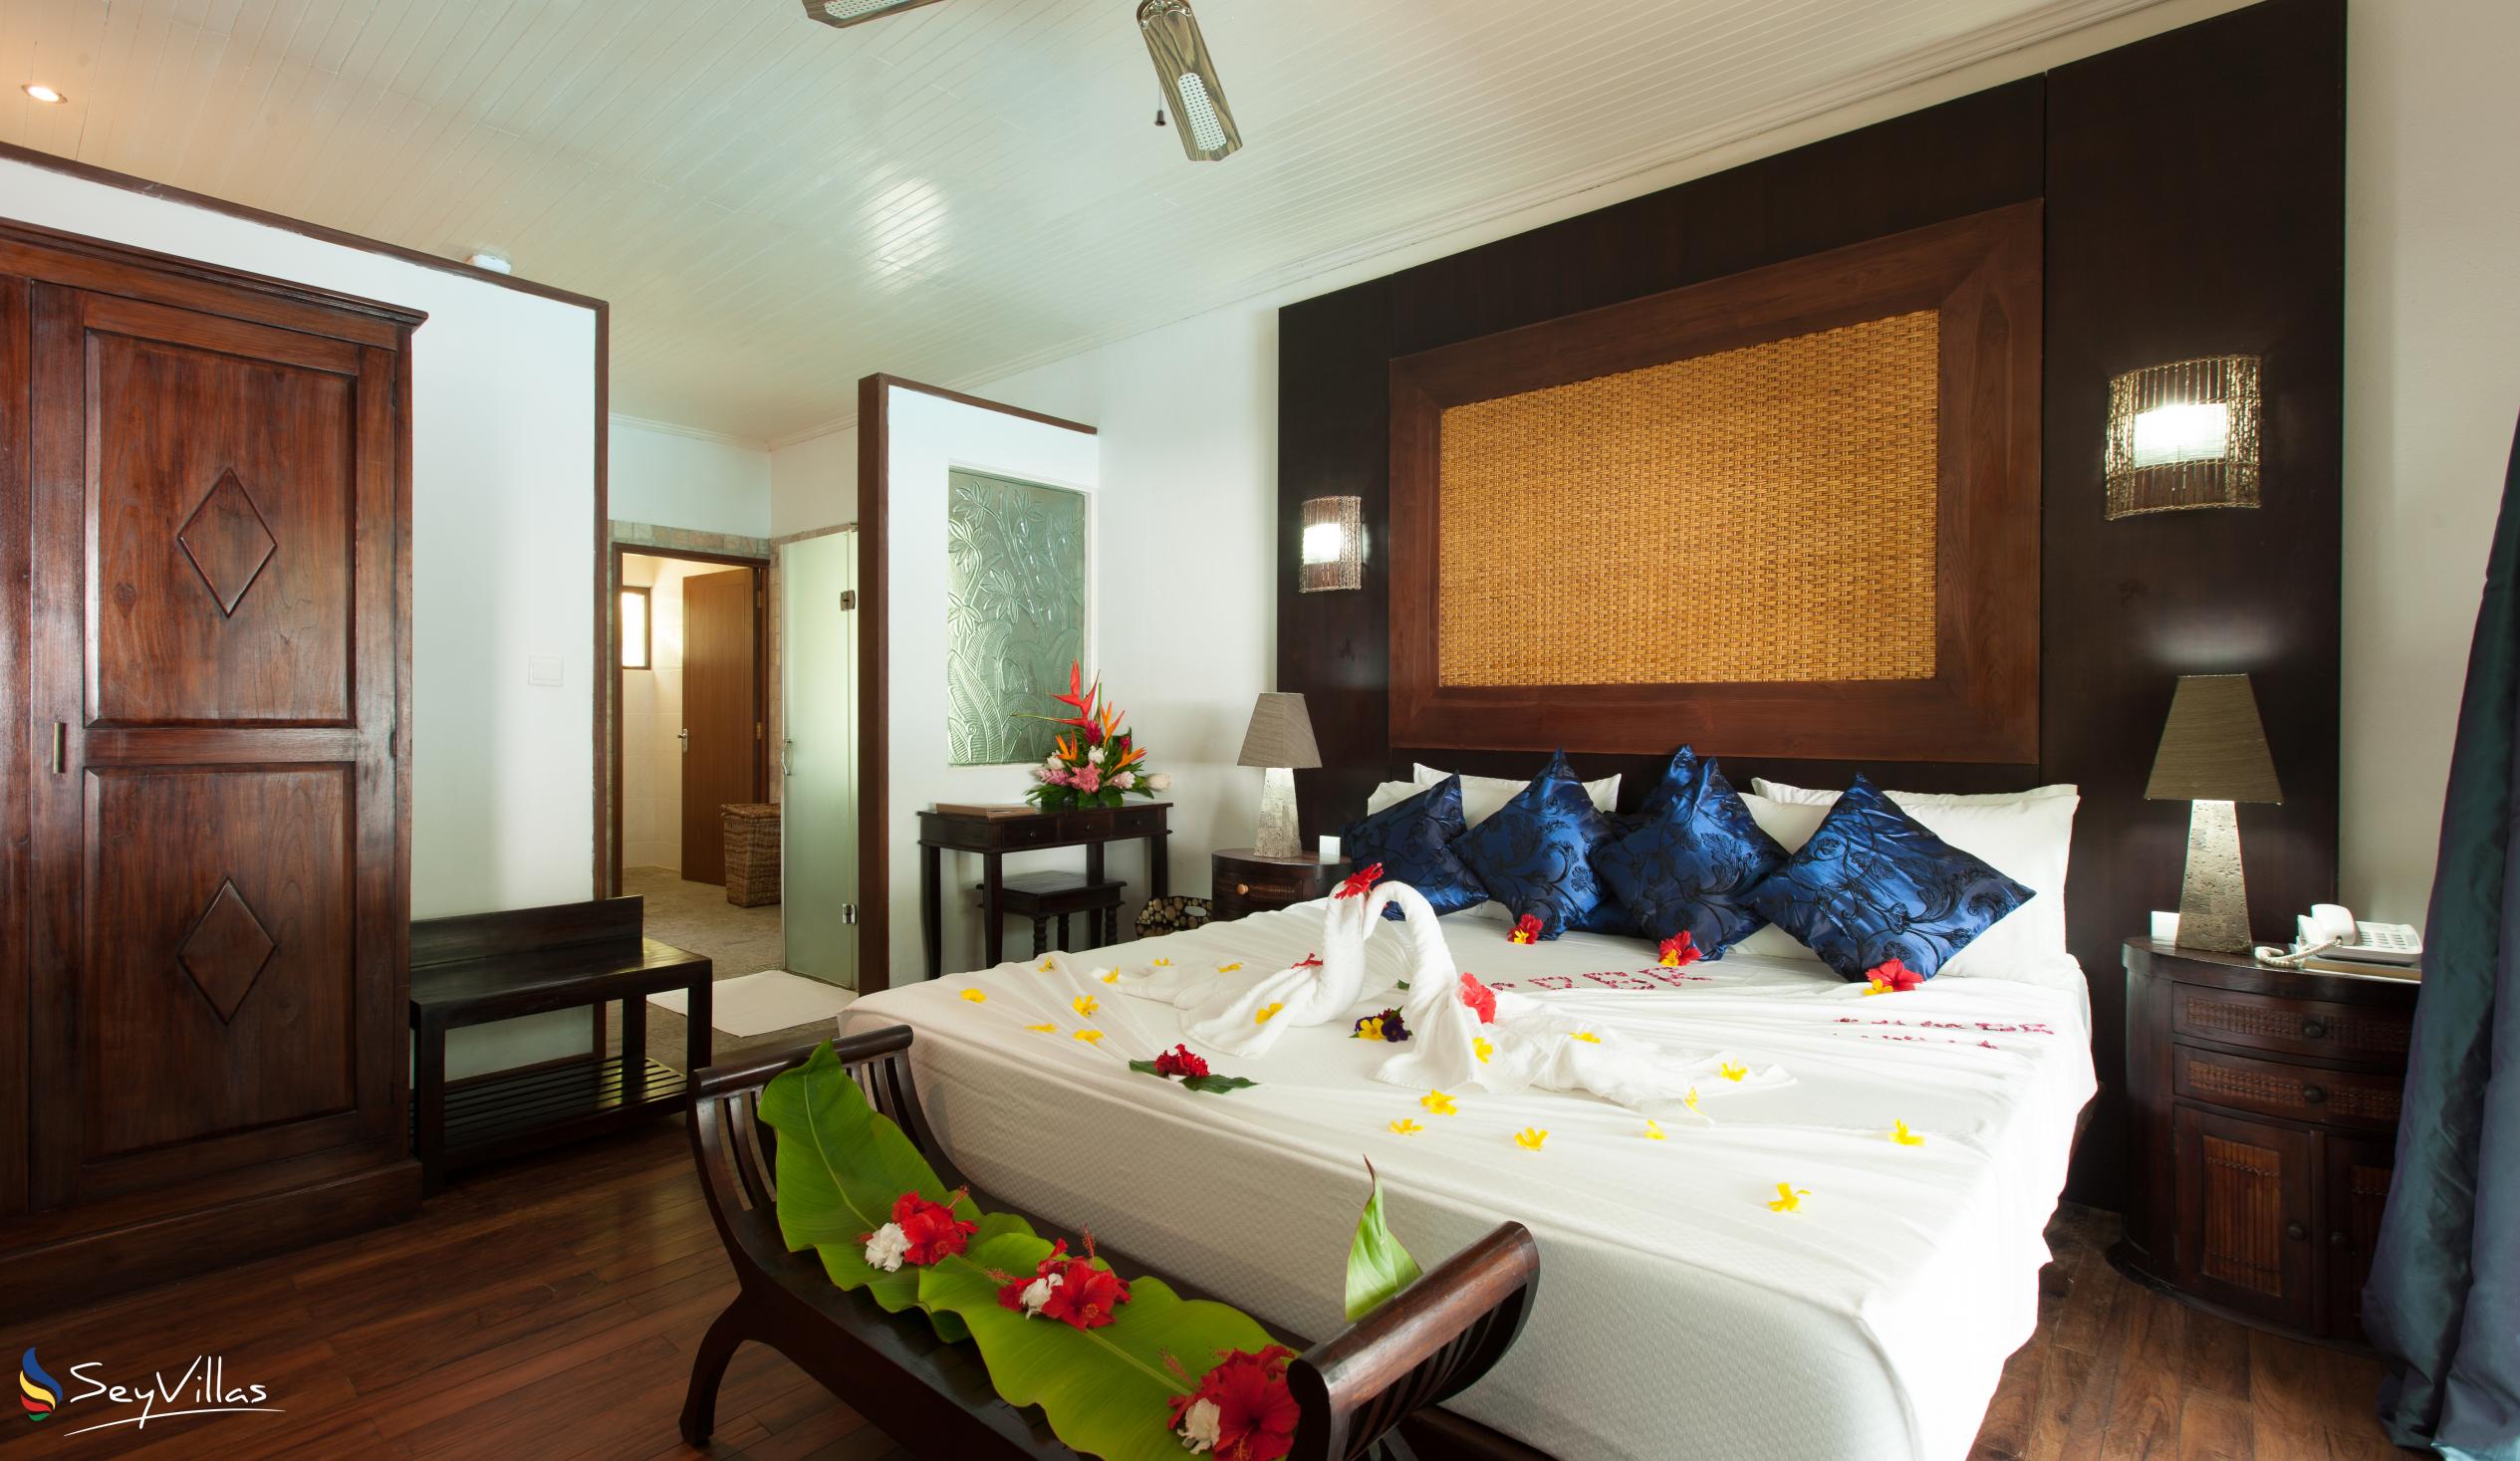 Foto 55: Le Relax Beach Resort - Suite Deluxe - Praslin (Seychelles)